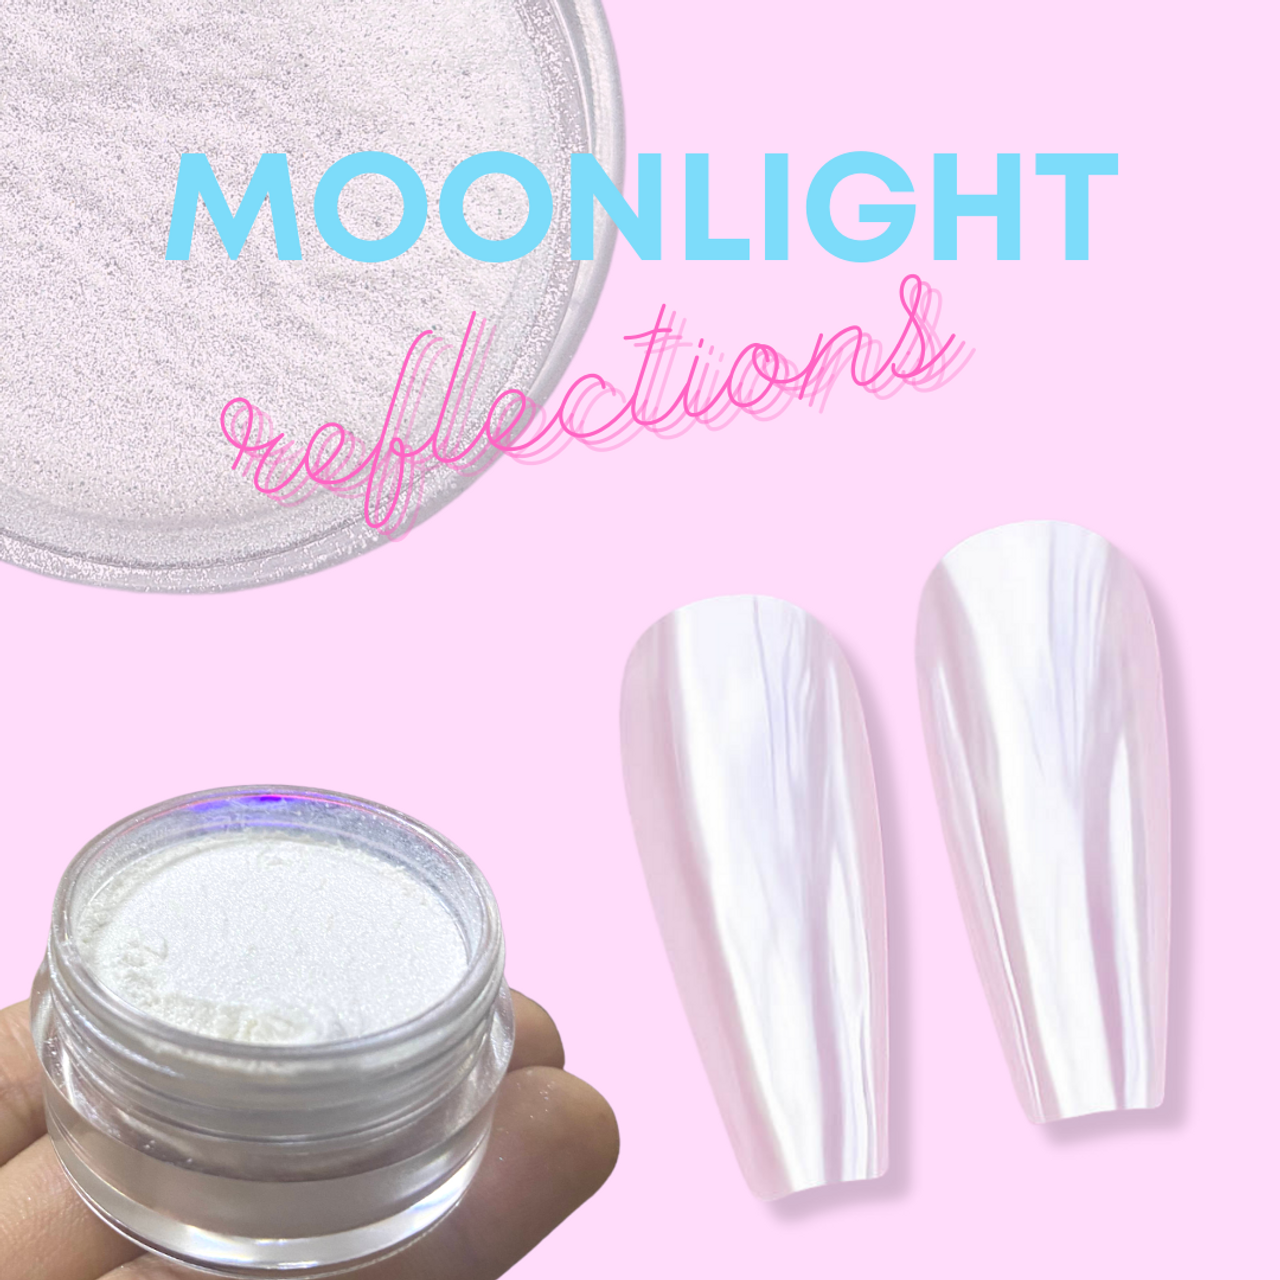 Moonlight Reflection White Chrome Pigment Powder (Glazed Nails)